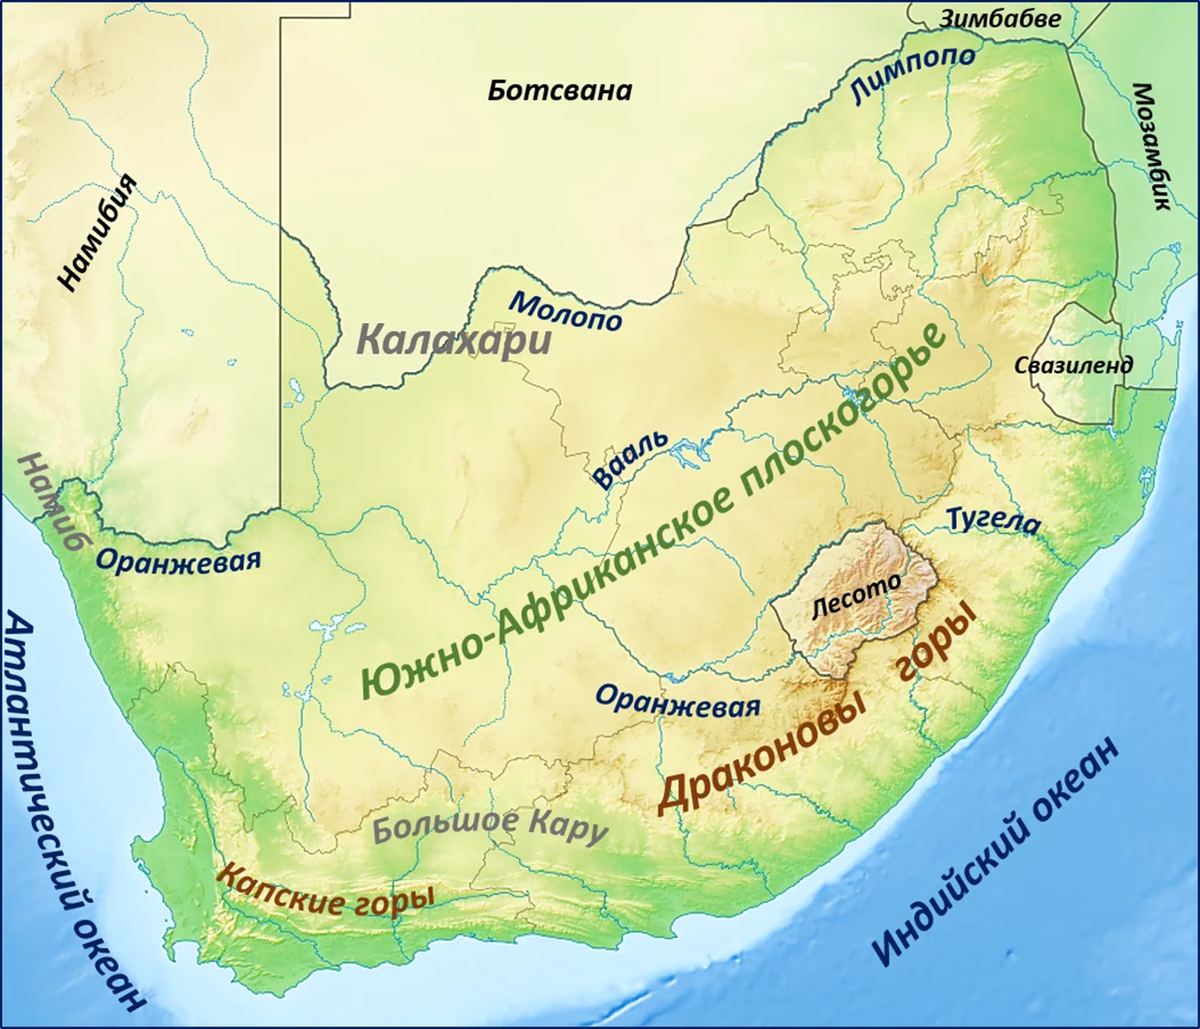 Самая высокая точка атласа. Драконовы горы ЮАР. Капские горы ЮАР. Капские и Драконовы горы на карте. Рельеф ЮАР карта.